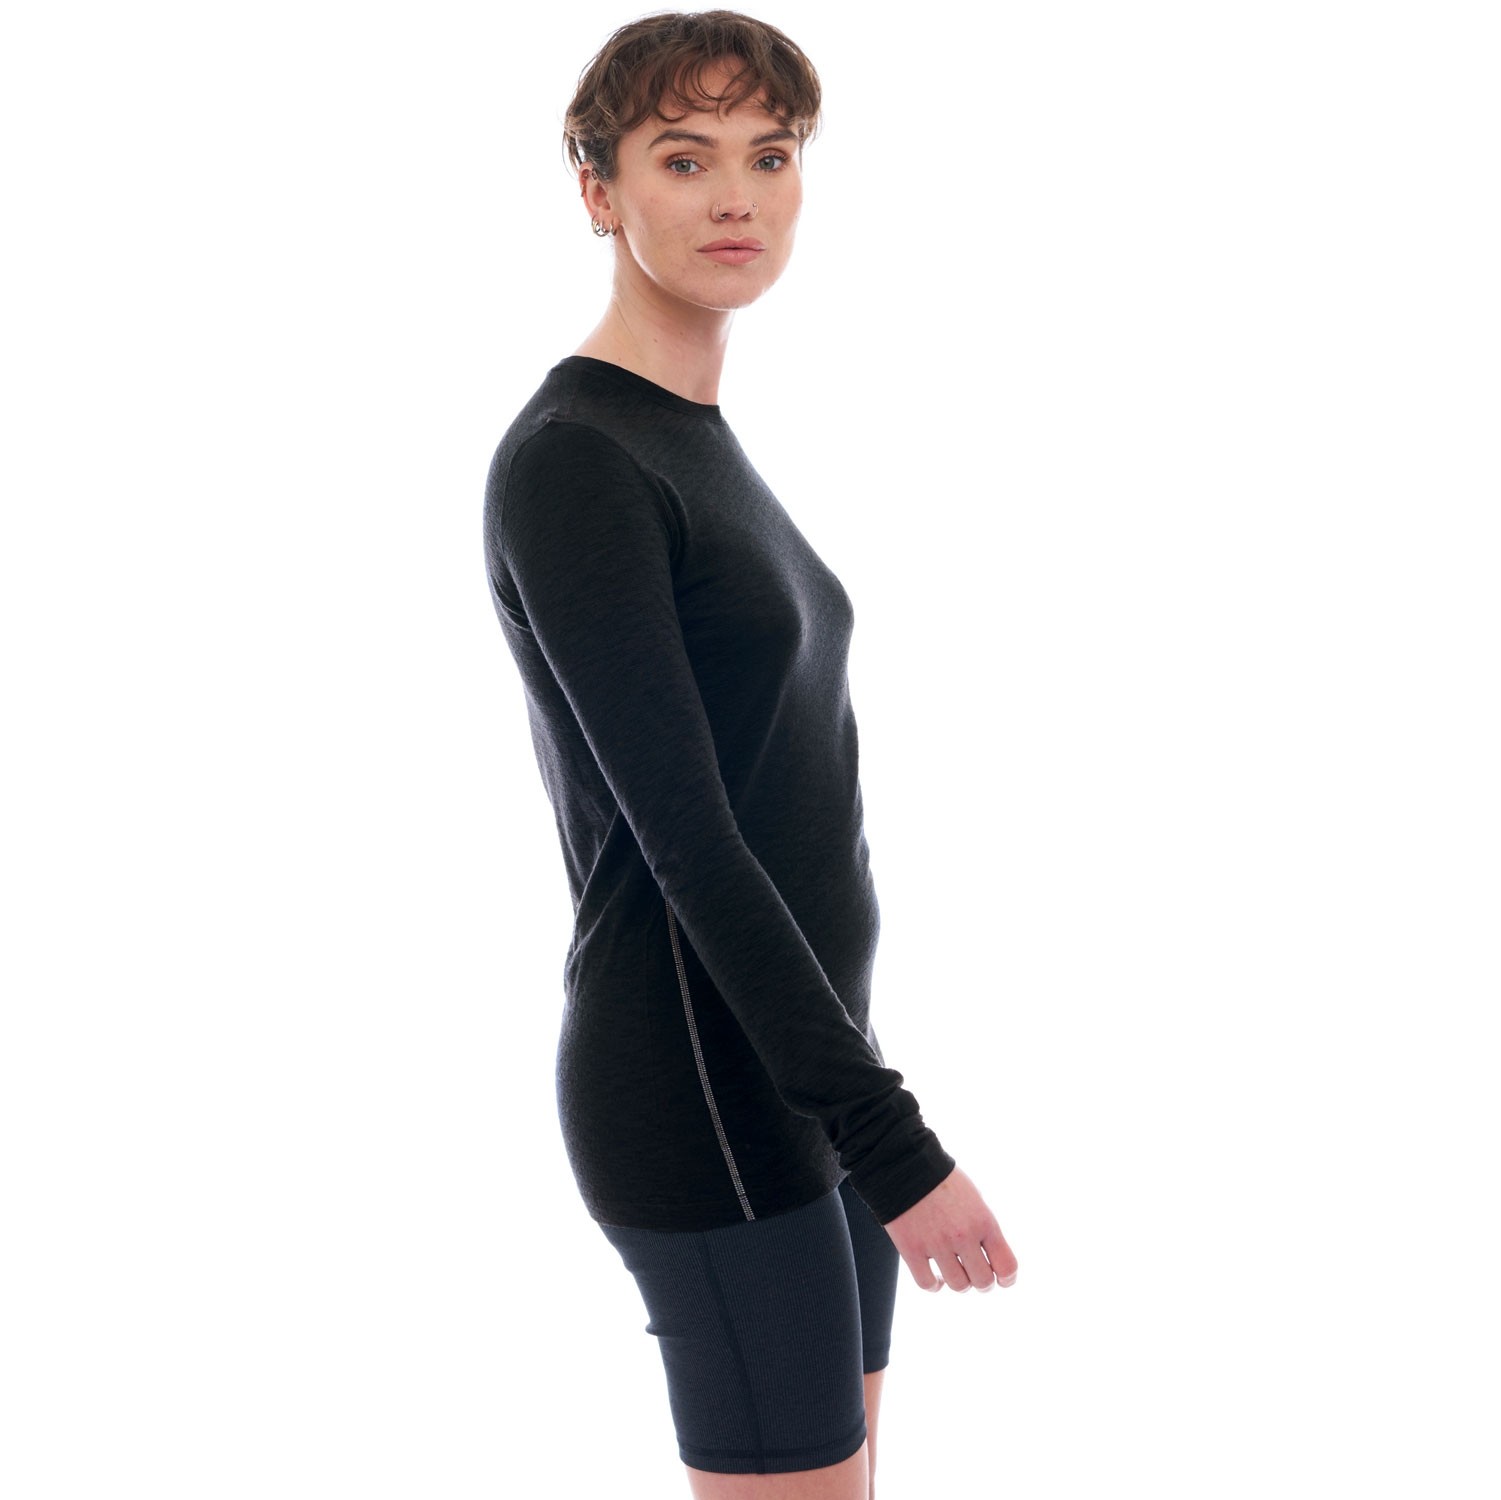 Artilect Sprint Long Sleeve Tee - Women's Merino Baselayer - Black